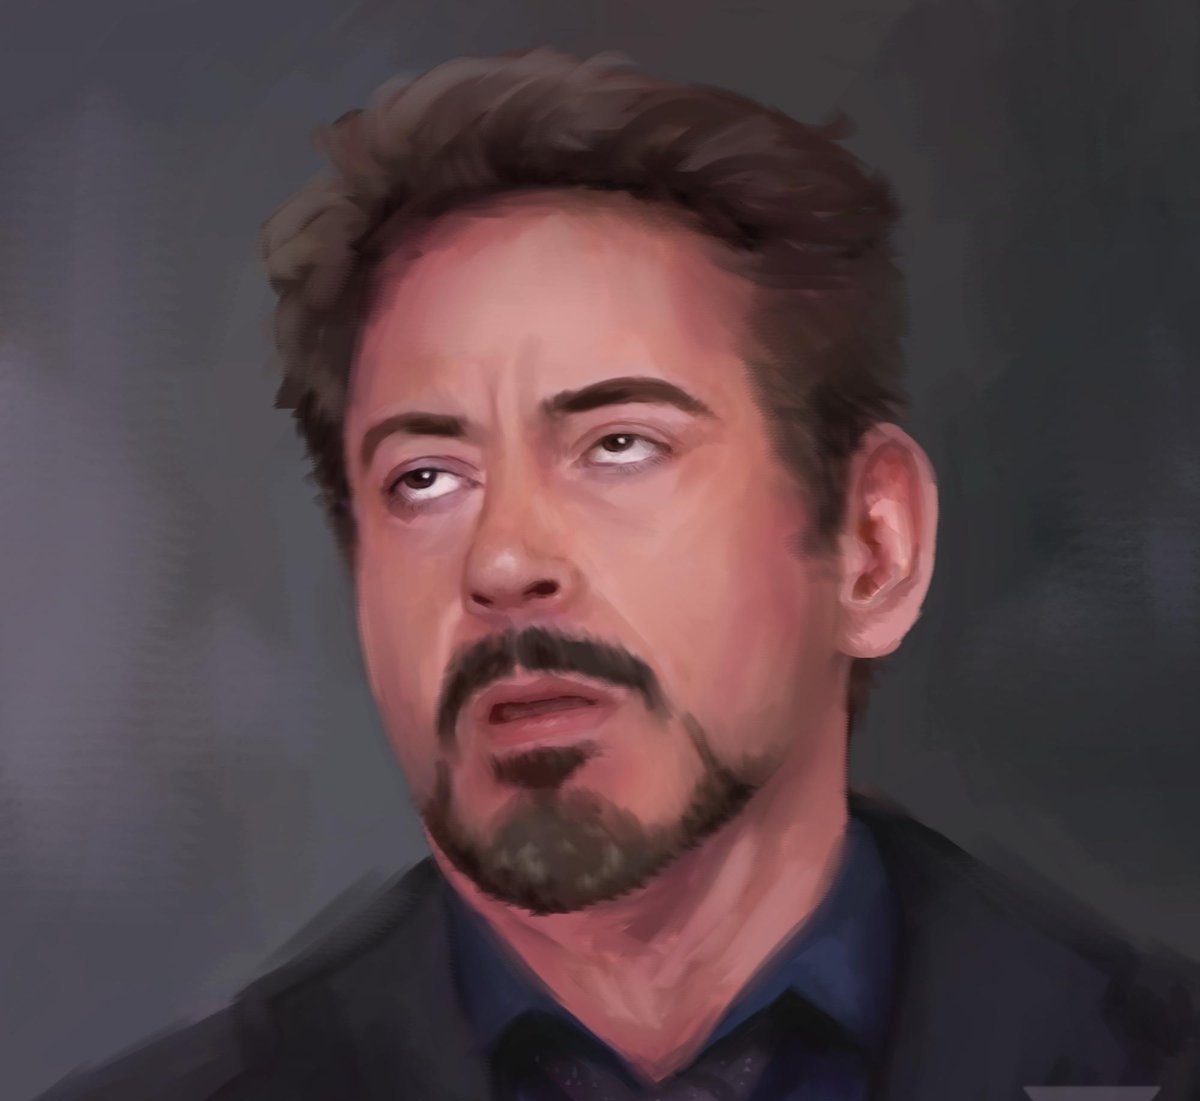 Robert Downey Jr. Eye Rolling meme